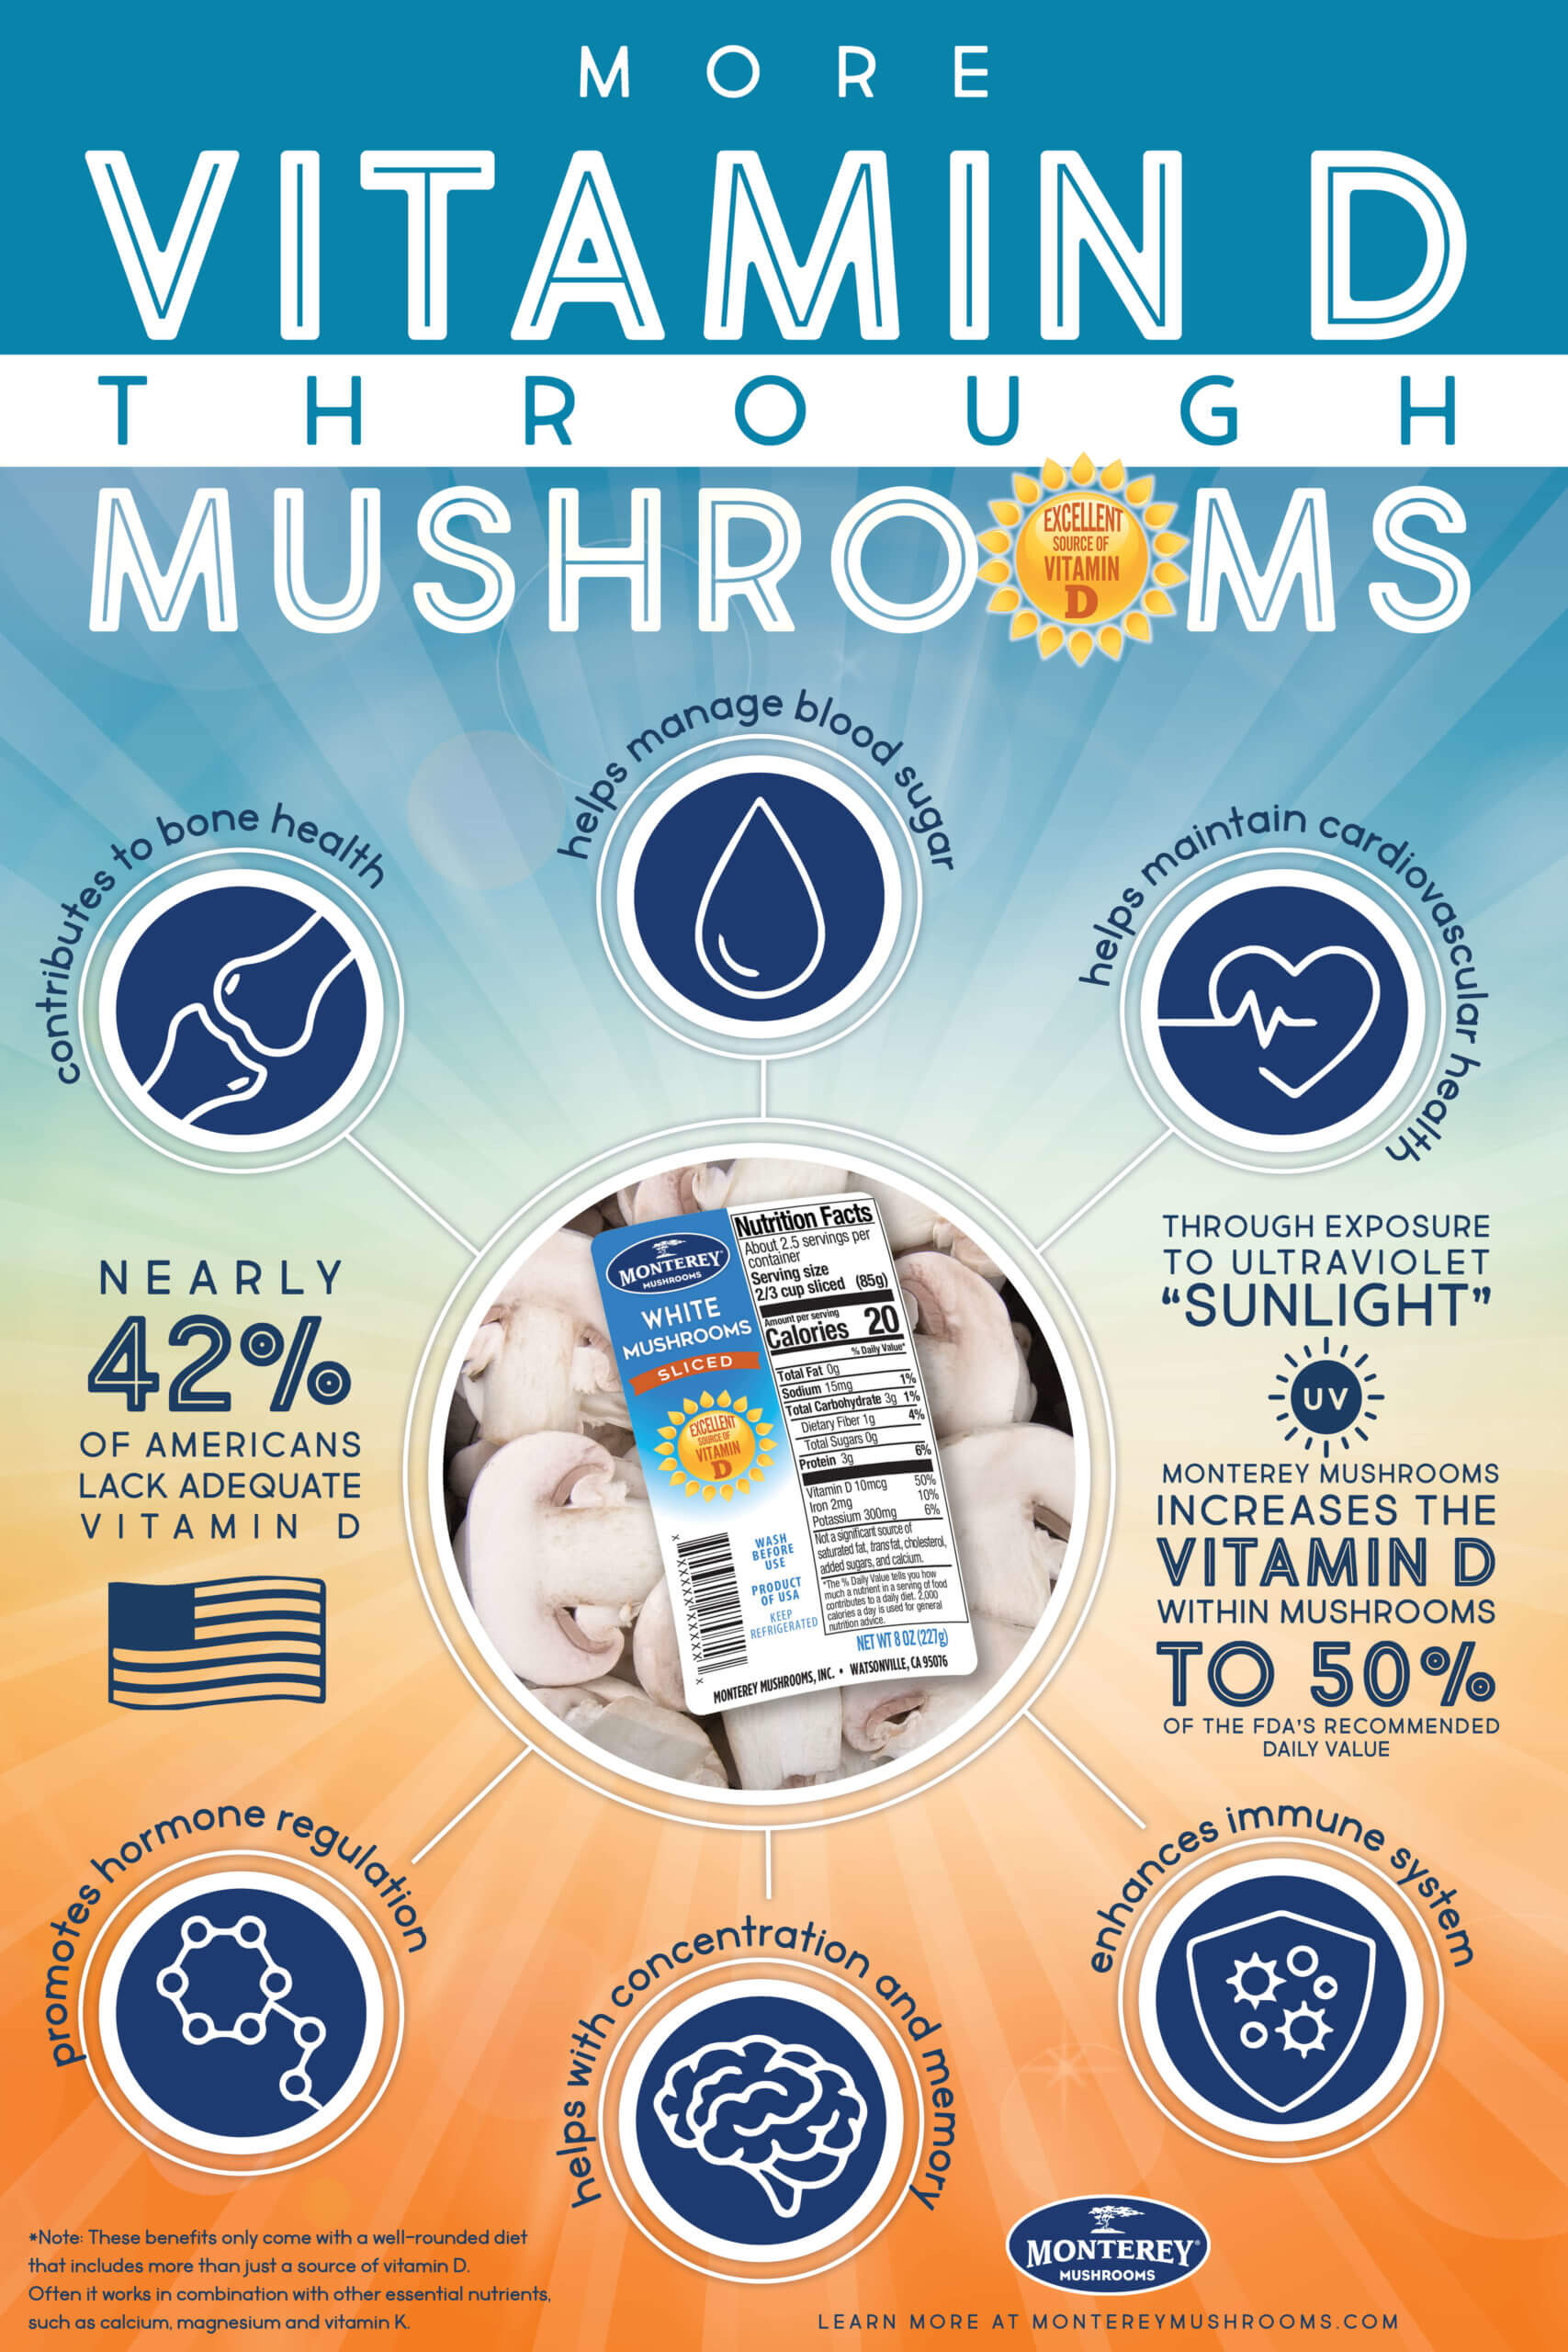 High Vitamin D Mushrooms